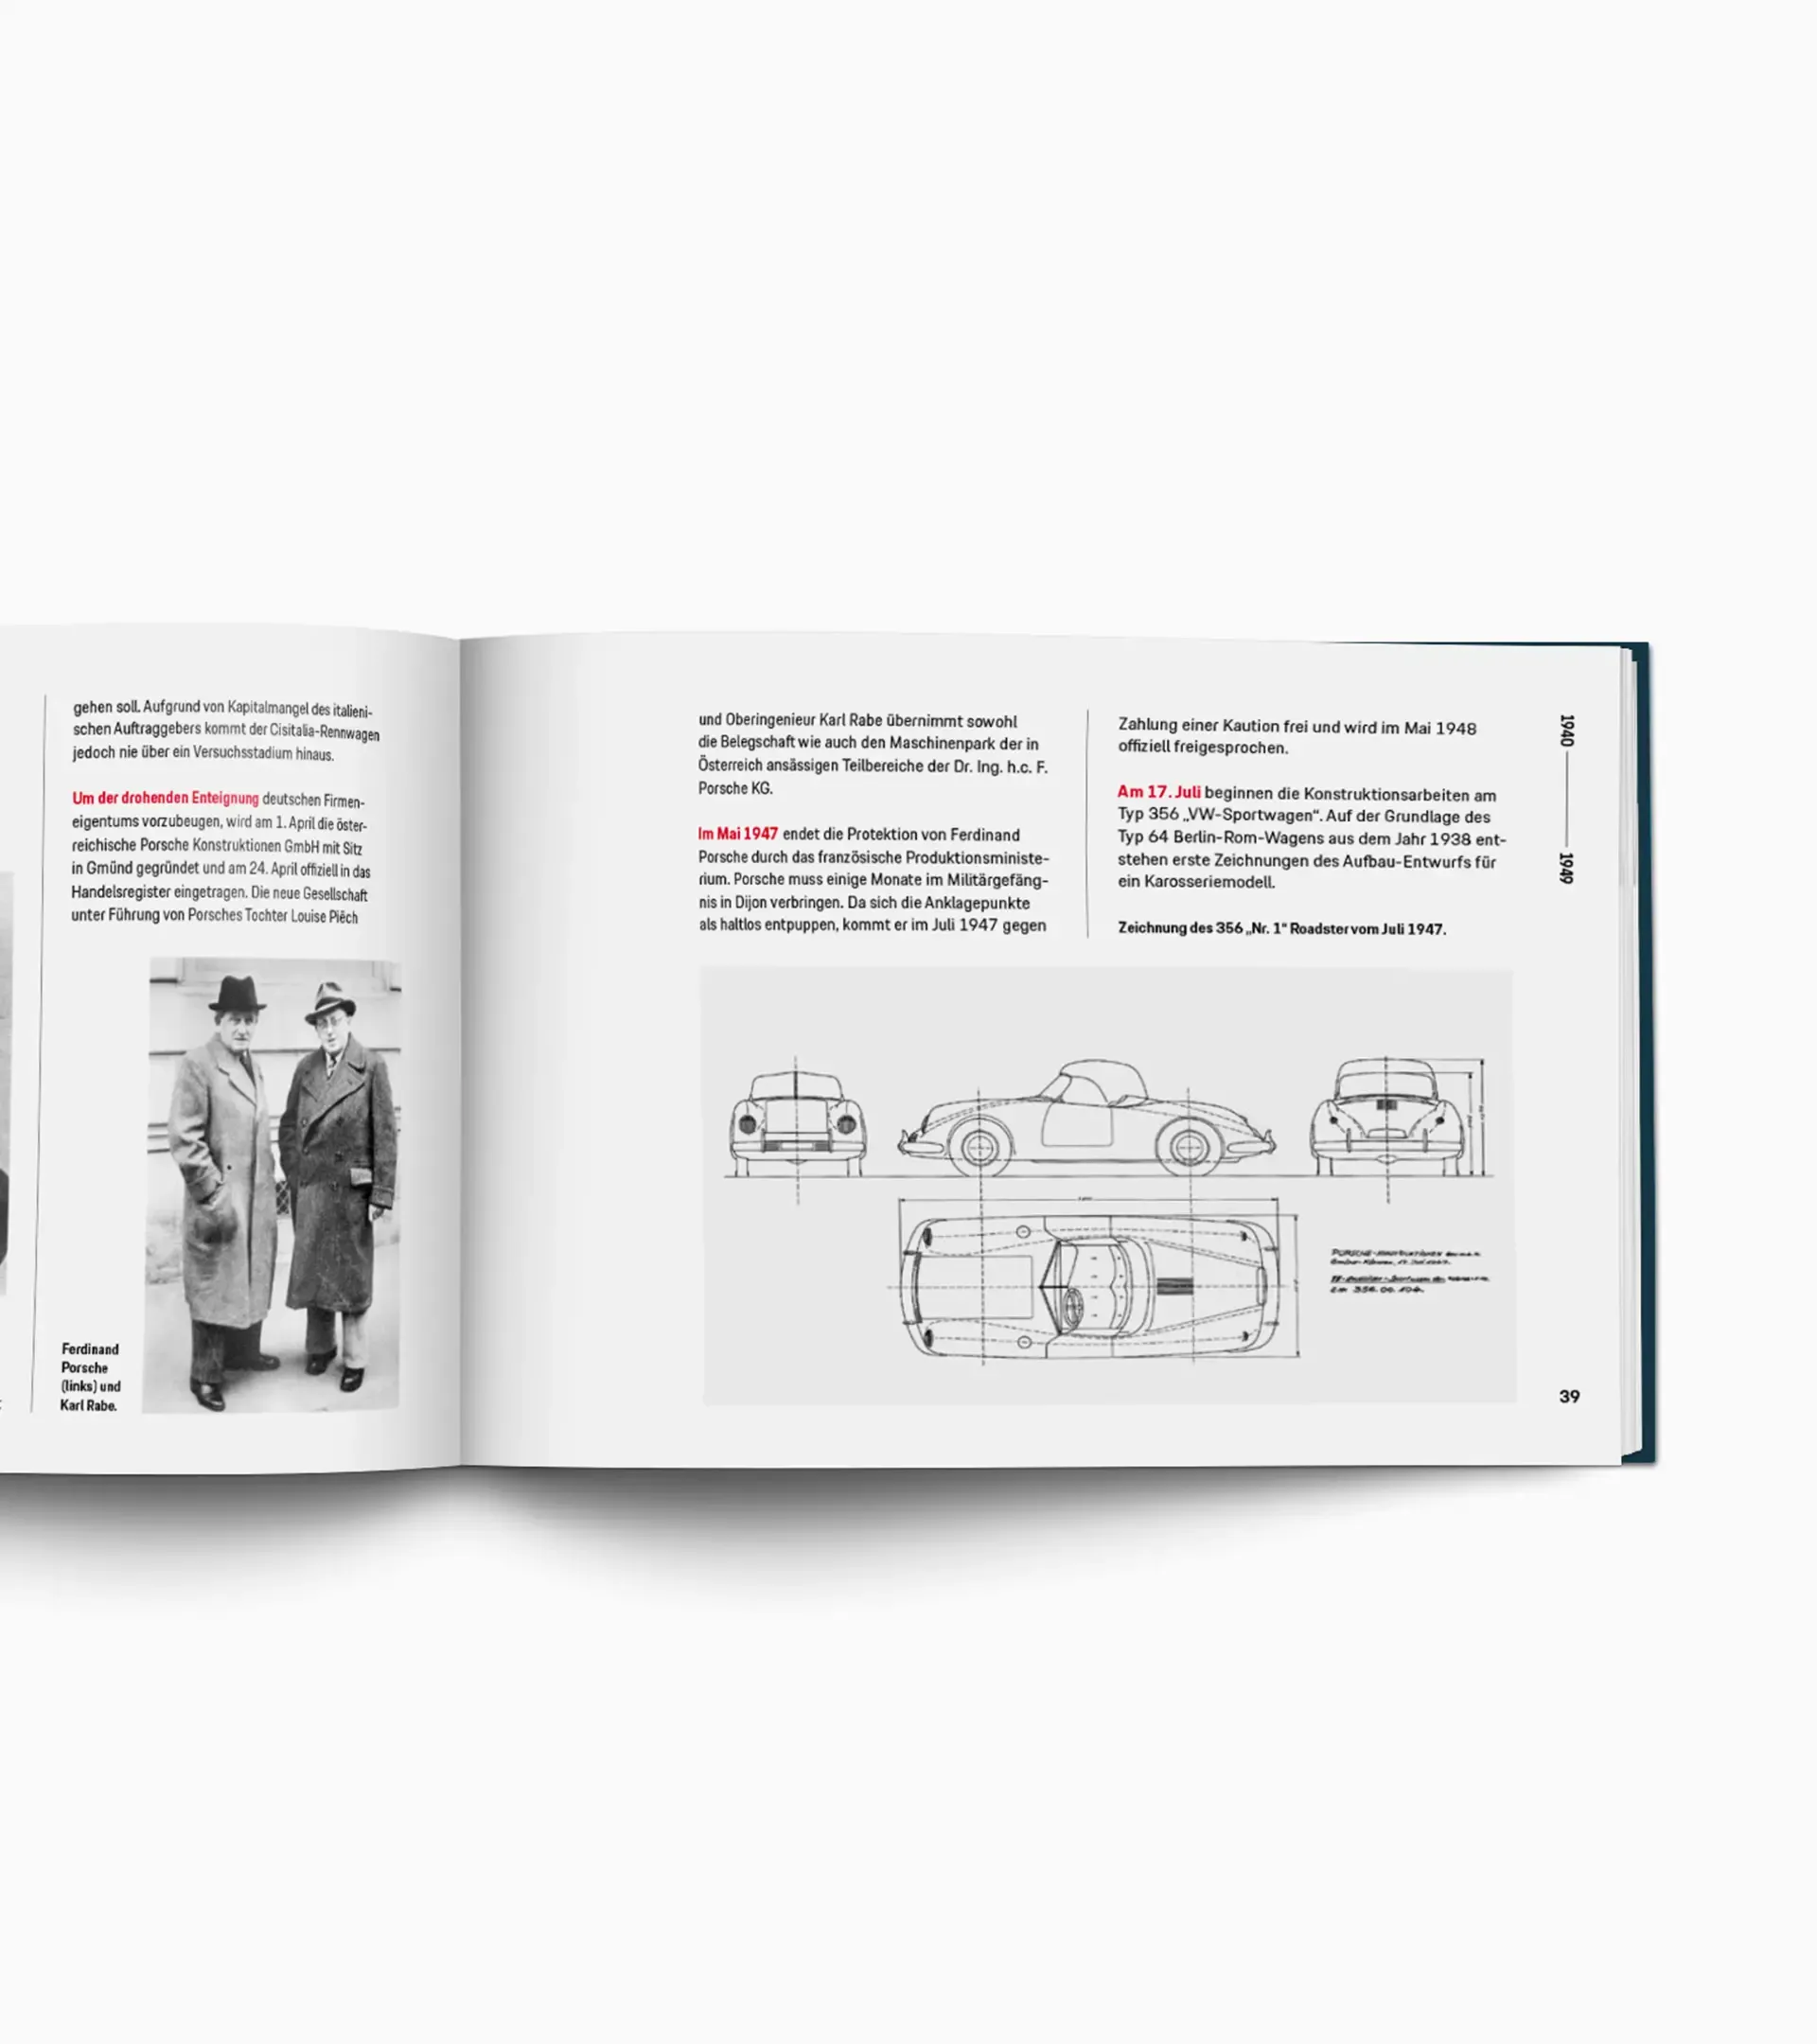 Book 'Porsche Chronik - seit 1931'